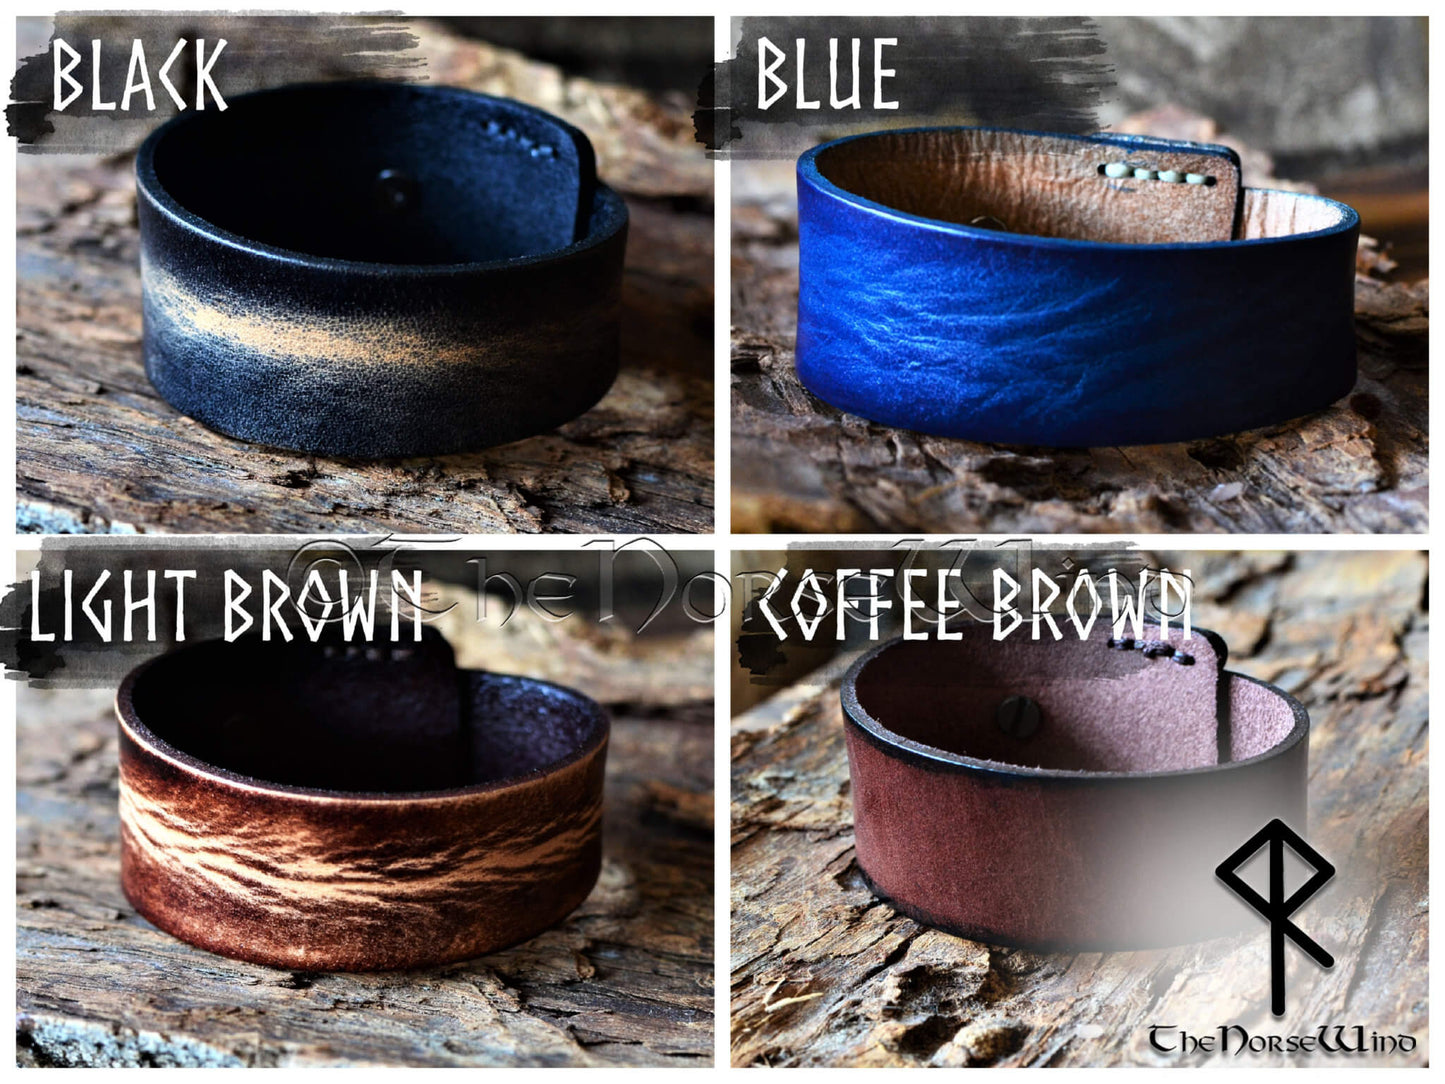 Custom Viking Leather Bracelet NAME in RUNES Wristband